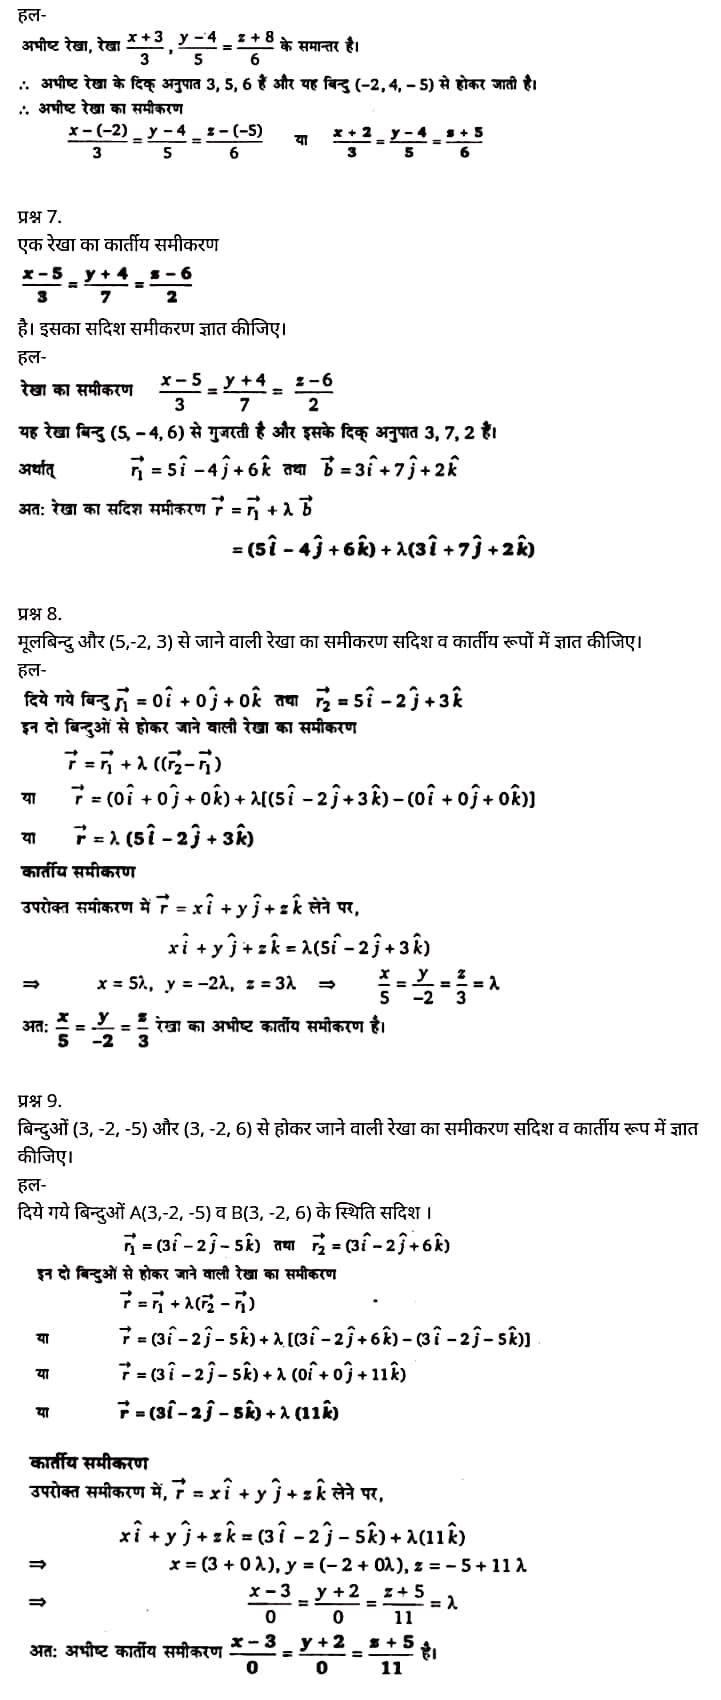 "Class 12 Maths Chapter 11", "Three Dimensional Geometry", Hindi Medium मैथ्स कक्षा 12 नोट्स pdf,  मैथ्स कक्षा 12 नोट्स 2021 NCERT,  मैथ्स कक्षा 12 PDF,  मैथ्स पुस्तक,  मैथ्स की बुक,  मैथ्स प्रश्नोत्तरी Class 12, 12 वीं मैथ्स पुस्तक RBSE,  बिहार बोर्ड 12 वीं मैथ्स नोट्स,   12th Maths book in hindi, 12th Maths notes in hindi, cbse books for class 12, cbse books in hindi, cbse ncert books, class 12 Maths notes in hindi,  class 12 hindi ncert solutions, Maths 2020, Maths 2021, Maths 2022, Maths book class 12, Maths book in hindi, Maths class 12 in hindi, Maths notes for class 12 up board in hindi, ncert all books, ncert app in hindi, ncert book solution, ncert books class 10, ncert books class 12, ncert books for class 7, ncert books for upsc in hindi, ncert books in hindi class 10, ncert books in hindi for class 12 Maths, ncert books in hindi for class 6, ncert books in hindi pdf, ncert class 12 hindi book, ncert english book, ncert Maths book in hindi, ncert Maths books in hindi pdf, ncert Maths class 12, ncert in hindi,  old ncert books in hindi, online ncert books in hindi,  up board 12th, up board 12th syllabus, up board class 10 hindi book, up board class 12 books, up board class 12 new syllabus, up Board Maths 2020, up Board Maths 2021, up Board Maths 2022, up Board Maths 2023, up board intermediate Maths syllabus, up board intermediate syllabus 2021, Up board Master 2021, up board model paper 2021, up board model paper all subject, up board new syllabus of class 12th Maths, up board paper 2021, Up board syllabus 2021, UP board syllabus 2022,  12 वीं मैथ्स पुस्तक हिंदी में, 12 वीं मैथ्स नोट्स हिंदी में, कक्षा 12 के लिए सीबीएससी पुस्तकें, हिंदी में सीबीएससी पुस्तकें, सीबीएससी  पुस्तकें, कक्षा 12 मैथ्स नोट्स हिंदी में, कक्षा 12 हिंदी एनसीईआरटी समाधान, मैथ्स 2020, मैथ्स 2021, मैथ्स 2022, मैथ्स  बुक क्लास 12, मैथ्स बुक इन हिंदी, बायोलॉजी क्लास 12 हिंदी में, मैथ्स नोट्स इन क्लास 12 यूपी  बोर्ड इन हिंदी, एनसीईआरटी मैथ्स की किताब हिंदी में,  बोर्ड 12 वीं तक, 12 वीं तक की पाठ्यक्रम, बोर्ड कक्षा 10 की हिंदी पुस्तक  , बोर्ड की कक्षा 12 की किताबें, बोर्ड की कक्षा 12 की नई पाठ्यक्रम, बोर्ड मैथ्स 2020, यूपी   बोर्ड मैथ्स 2021, यूपी  बोर्ड मैथ्स 2022, यूपी  बोर्ड मैथ्स 2023, यूपी  बोर्ड इंटरमीडिएट बायोलॉजी सिलेबस, यूपी  बोर्ड इंटरमीडिएट सिलेबस 2021, यूपी  बोर्ड मास्टर 2021, यूपी  बोर्ड मॉडल पेपर 2021, यूपी  मॉडल पेपर सभी विषय, यूपी  बोर्ड न्यू क्लास का सिलेबस  12 वीं मैथ्स, अप बोर्ड पेपर 2021, यूपी बोर्ड सिलेबस 2021, यूपी बोर्ड सिलेबस 2022,   12 veen maiths buk hindee mein, 12 veen maiths nots hindee mein, seebeeesasee kitaaben 12 ke lie, seebeeesasee kitaaben hindee mein, seebeeesasee enaseeaaratee kitaaben, klaas 12 maiths nots in hindee, klaas 12 hindee enaseeteeaar solyooshans, maiths 2020, maiths 2021, maiths 2022, maiths buk klaas 12, maiths buk in hindee, maiths klaas 12 hindee mein, maiths nots phor klaas 12 ap bord in hindee, nchairt all books, nchairt app in hindi, nchairt book solution, nchairt books klaas 10, nchairt books klaas 12, nchairt books kaksha 7 ke lie, nchairt books for hindi mein hindee mein, nchairt books in hindi kaksha 10, nchairt books in hindi ke lie kaksha 12 ganit, nchairt kitaaben hindee mein kaksha 6 ke lie, nchairt pustaken hindee mein, nchairt books 12 hindee pustak, nchairt angrejee pustak mein , nchairt maths book in hindi, nchairt maths books in hindi pdf, nchairt maths chlass 12, nchairt in hindi, puraanee nchairt books in hindi, onalain nchairt books in hindi, bord 12 veen, up bord 12 veen ka silebas, up bord klaas 10 hindee kee pustak , bord kee kaksha 12 kee kitaaben, bord kee kaksha 12 kee naee paathyakram, bord kee ganit 2020, bord kee ganit 2021, ganit kee padhaee s 2022, up bord maiths 2023, up bord intarameediet maiths silebas, up bord intarameediet silebas 2021, up bord maastar 2021, up bord modal pepar 2021, up bord modal pepar sabhee vishay, up bord nyoo klaasiks oph klaas 12 veen maiths, up bord pepar 2021, up bord paathyakram 2021, yoopee bord paathyakram 2022,